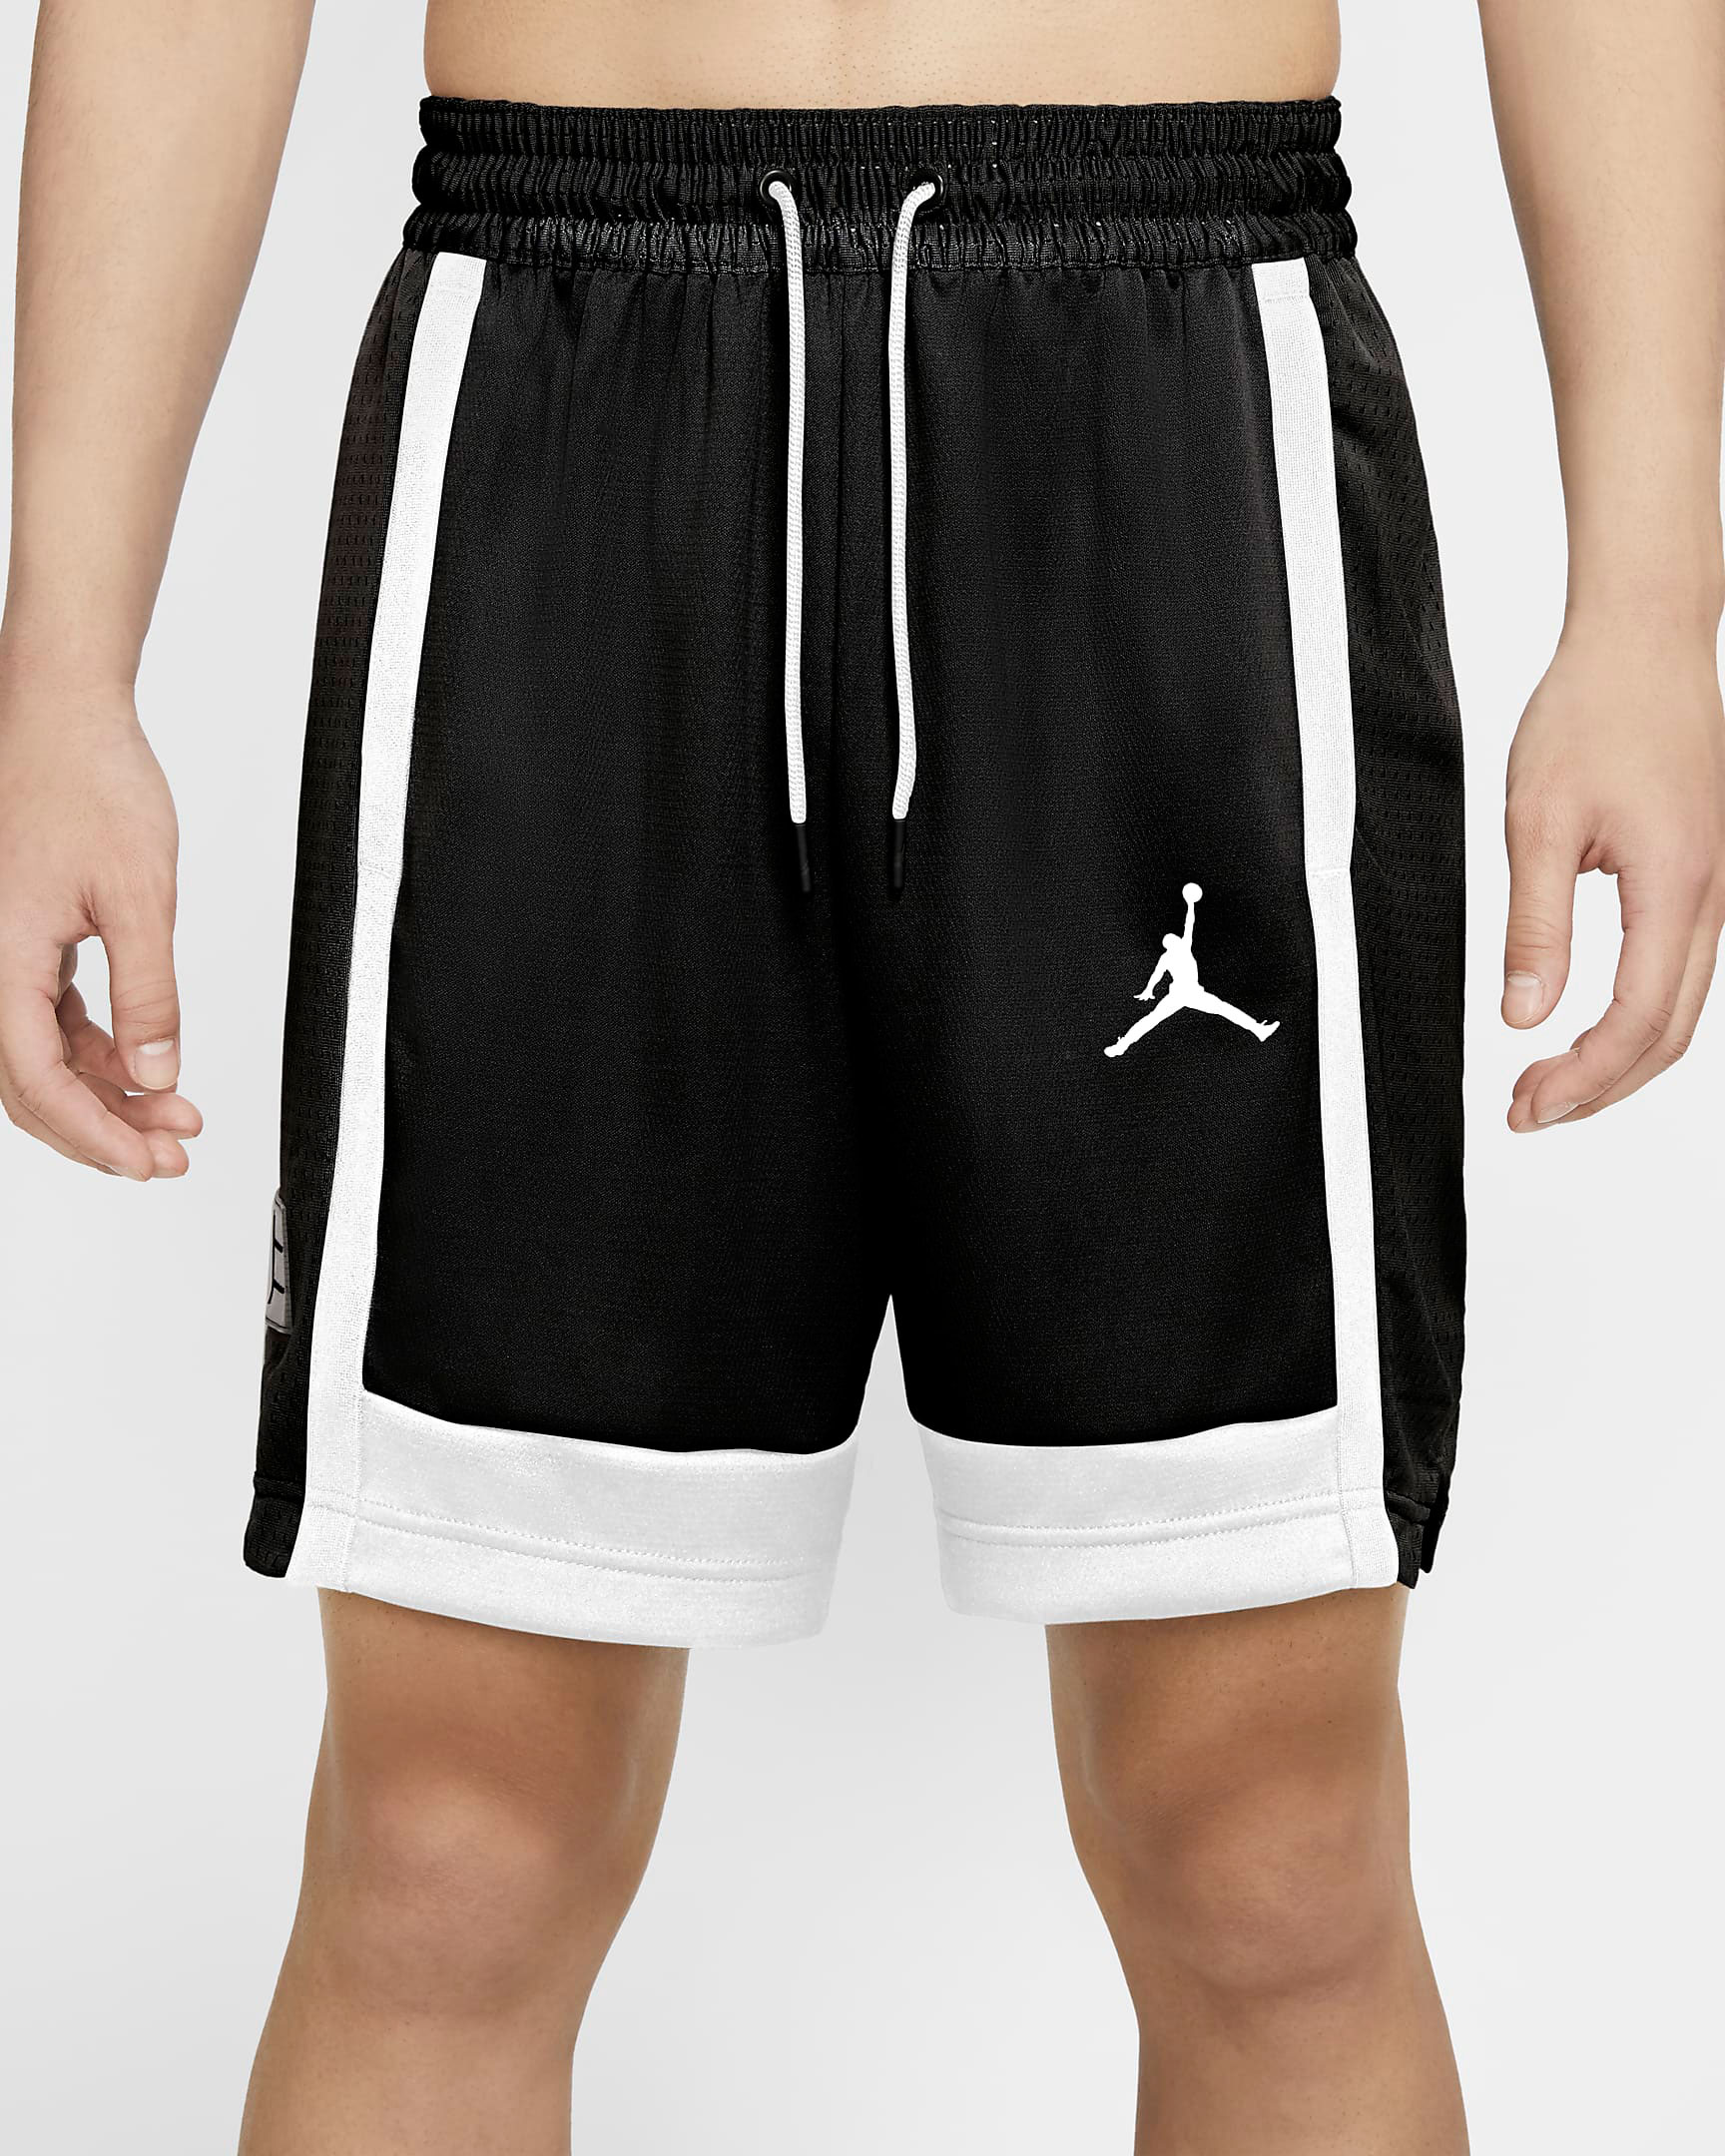 air-jordan-11-jubilee-black-white-jordan-shorts-1